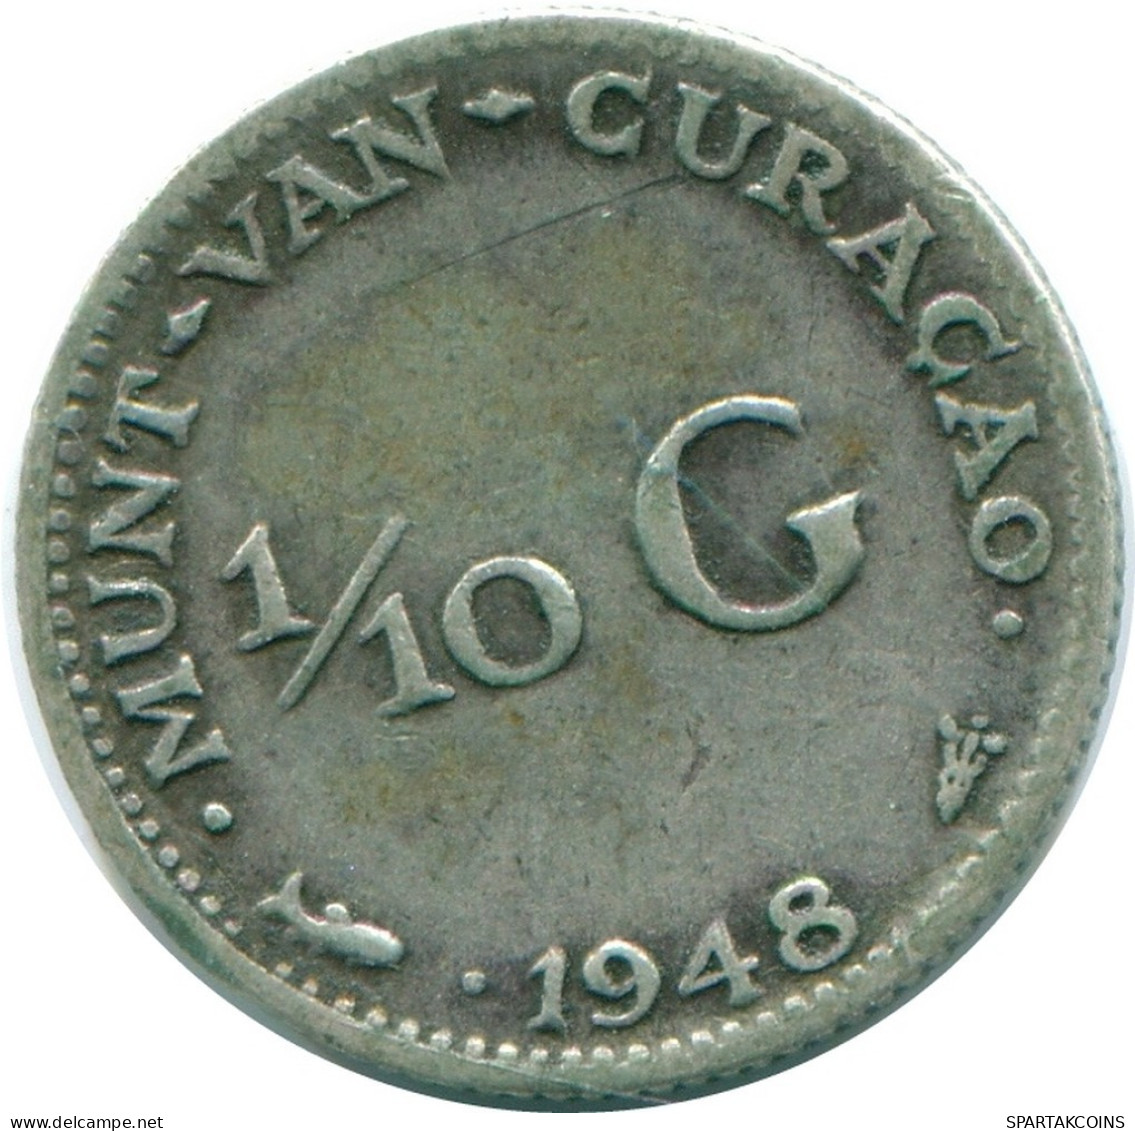 1/10 GULDEN 1948 CURACAO NIEDERLANDE SILBER Koloniale Münze #NL11983.3.D.A - Curacao